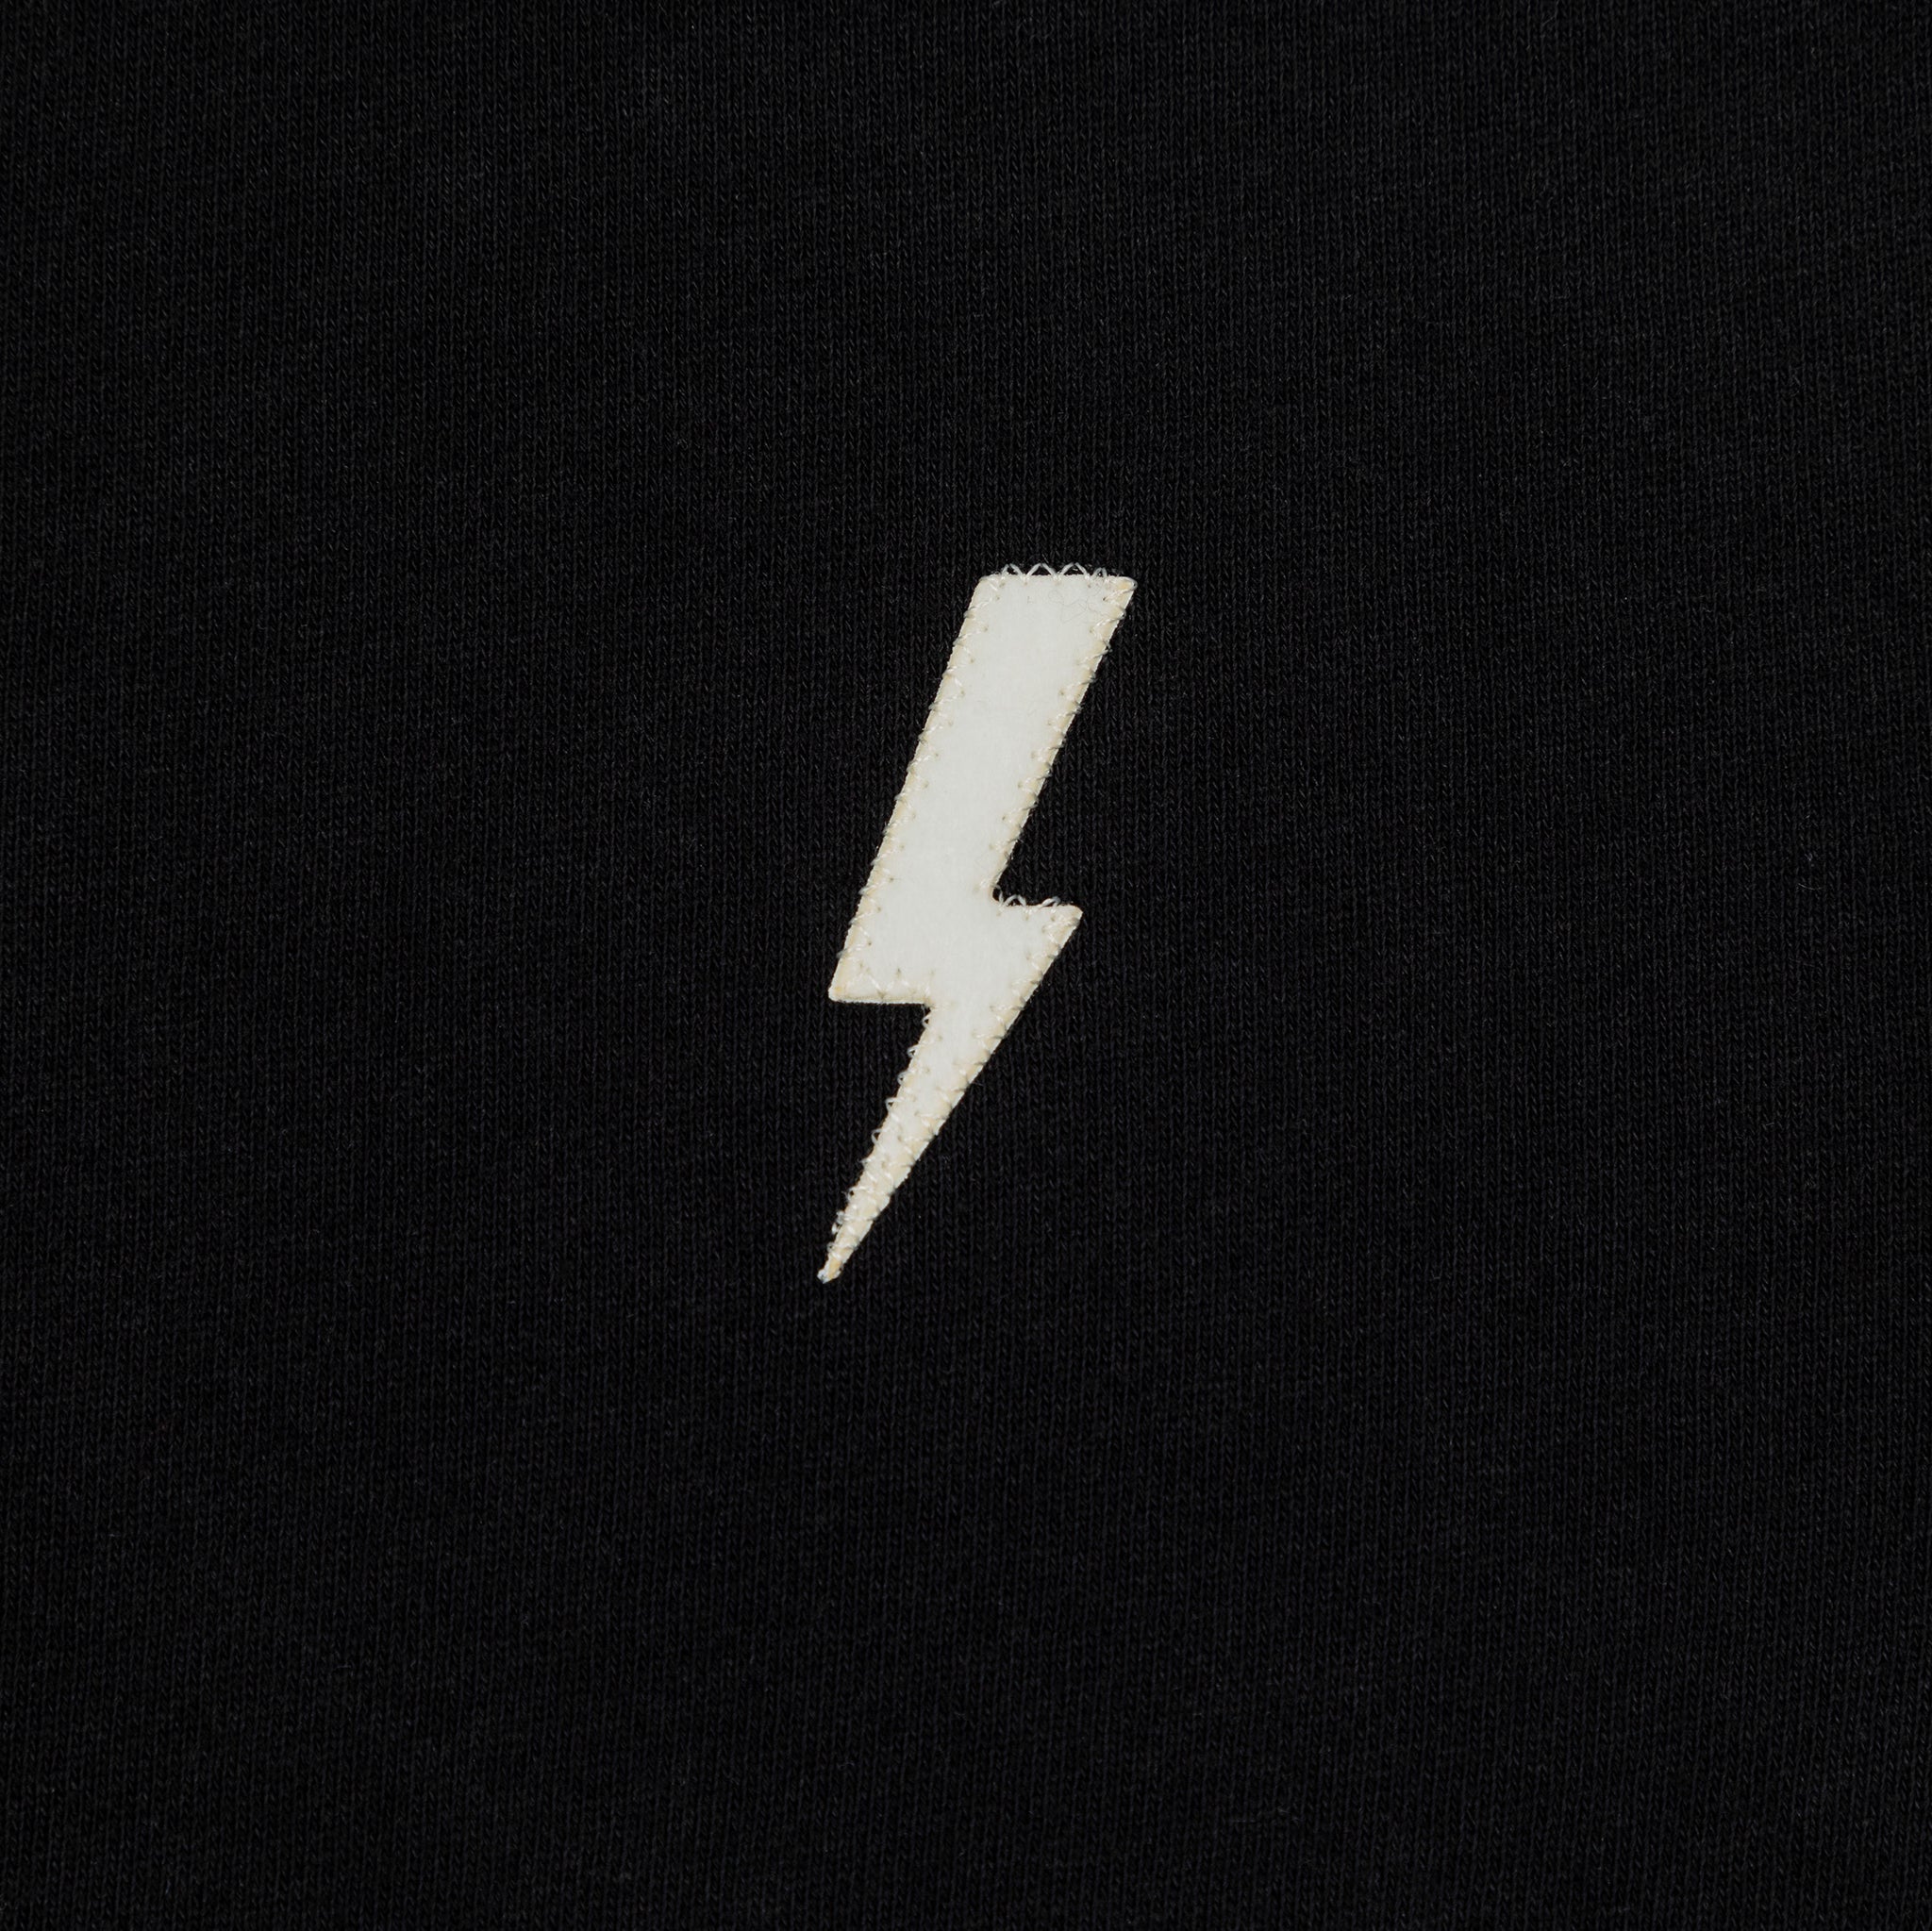 Front detailed shot of embroidered white lightning bolt.